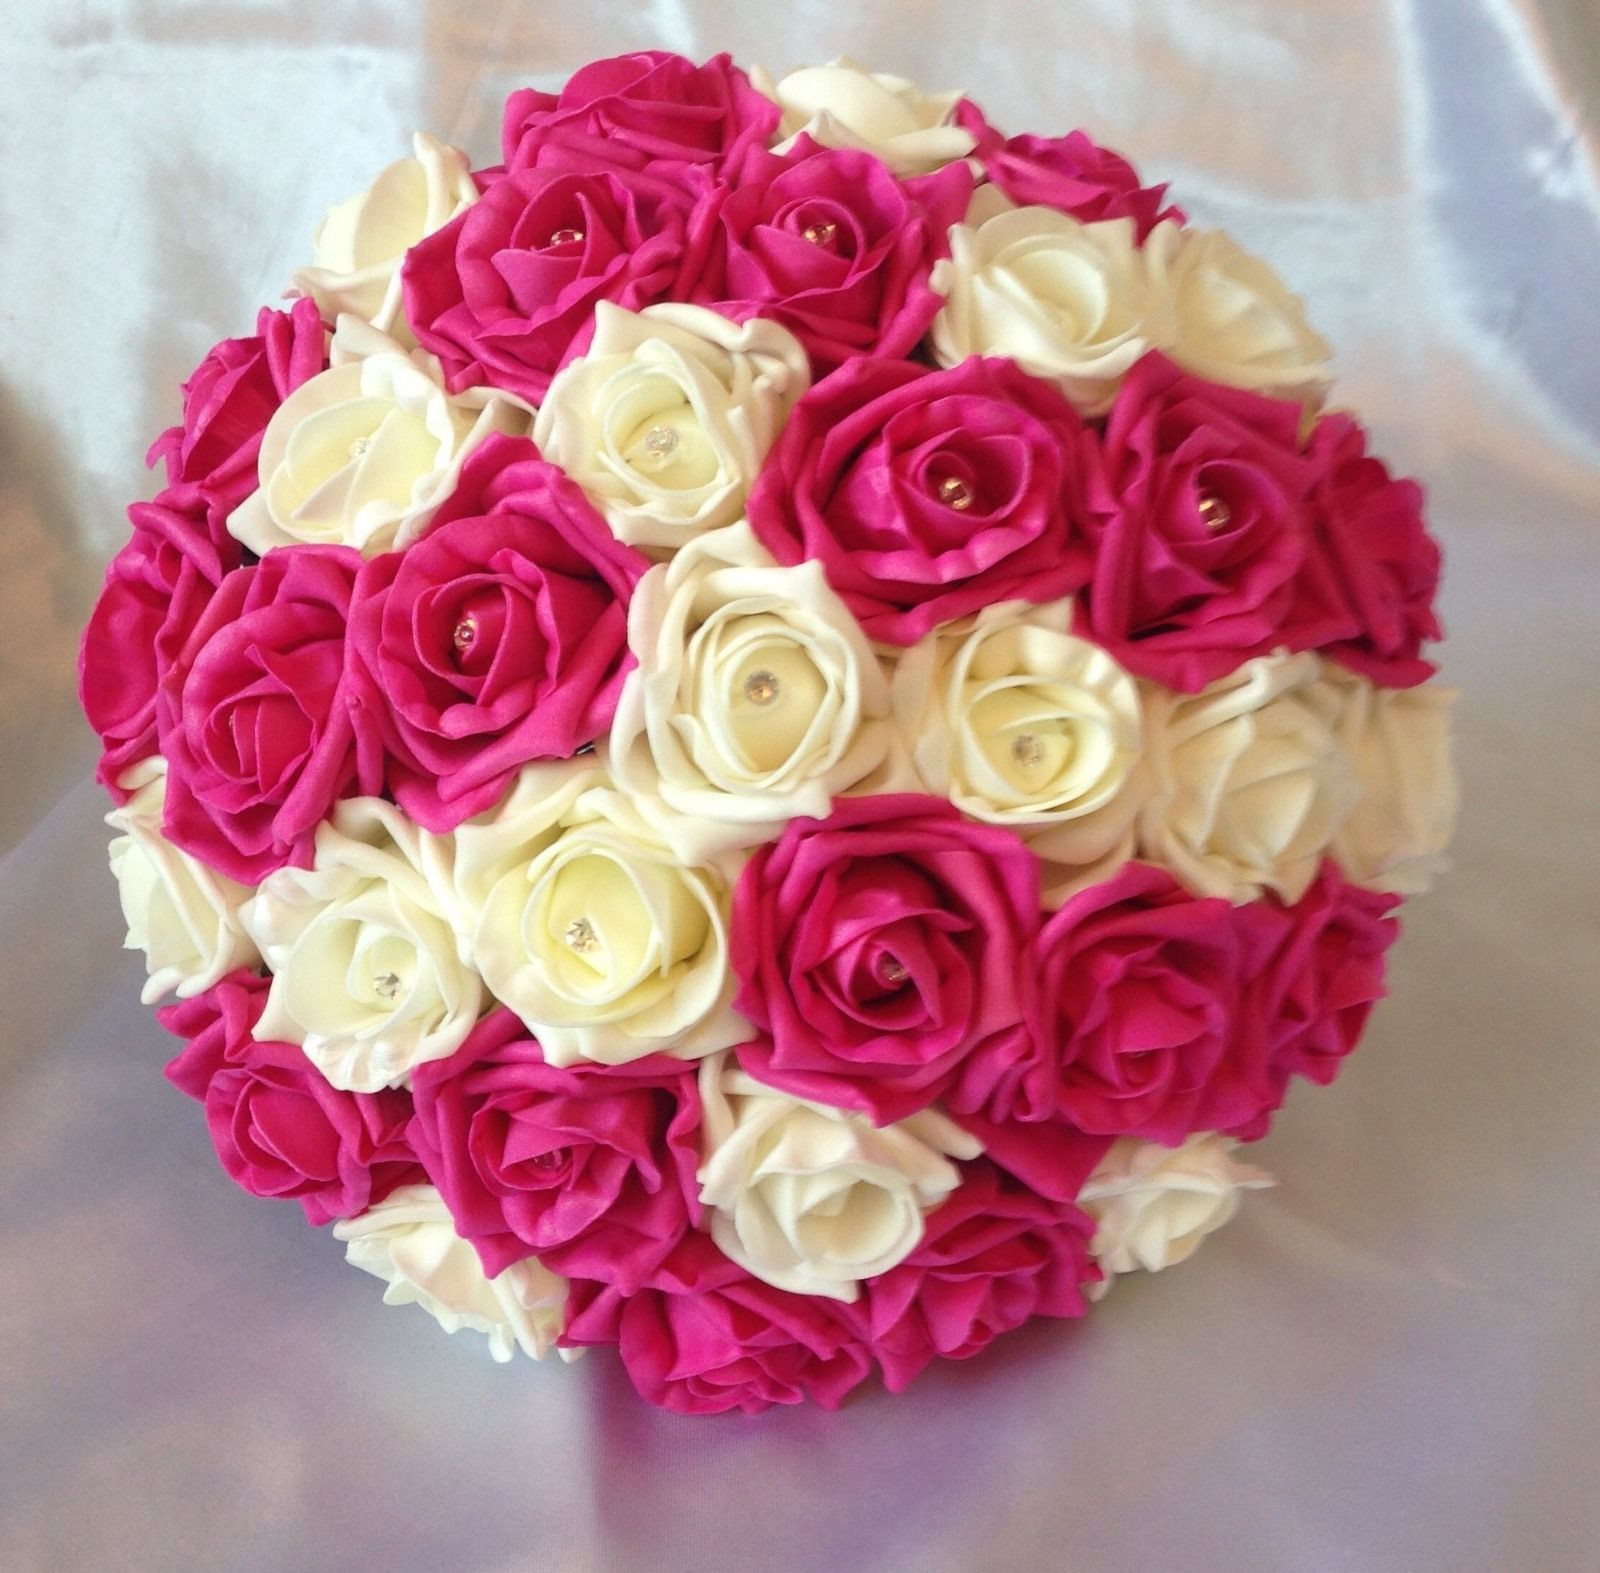 Hot Pink Wedding Flowers
 ARTIFICIAL FLOWERS HOT PINK IVORY FOAM ROSE BRIDE WEDDING